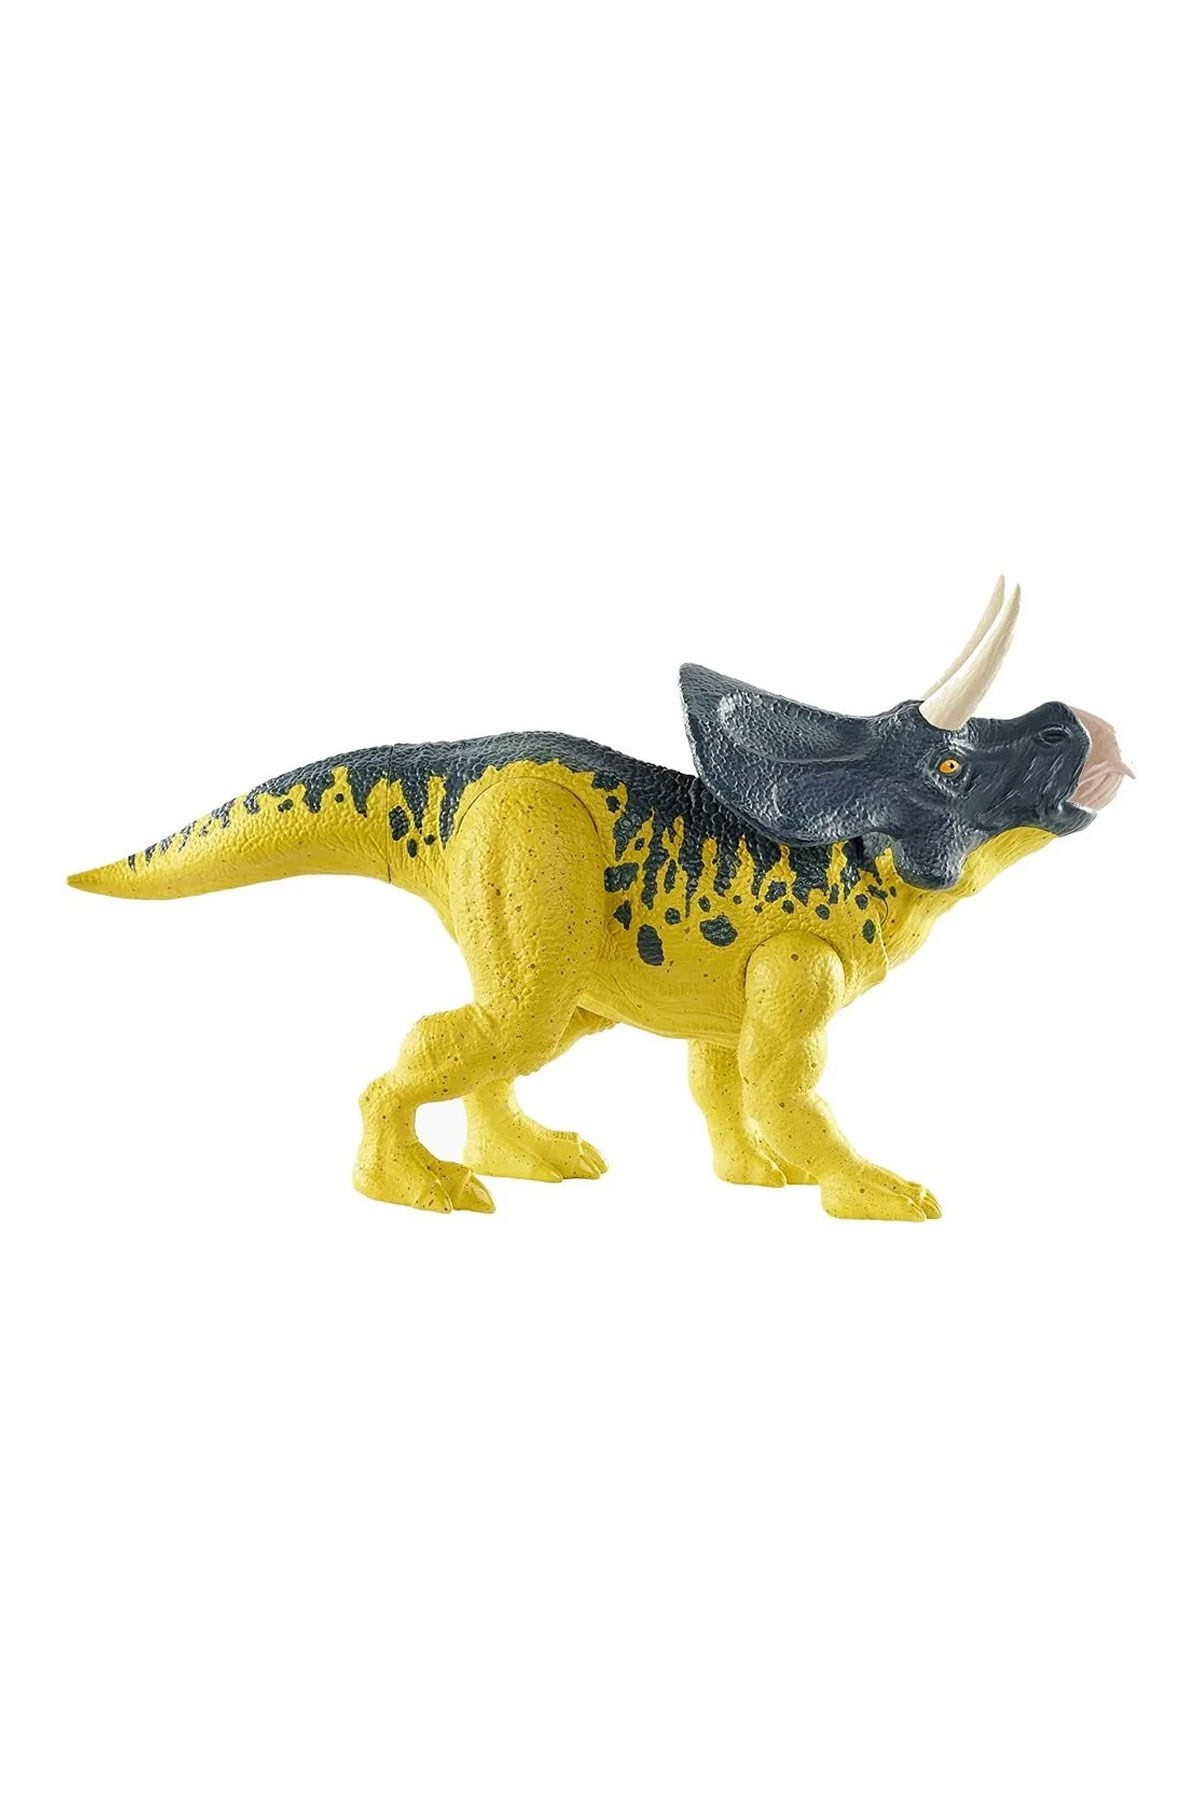 Jurassic World Dinozor Figürleri Zuniceratops GWD00